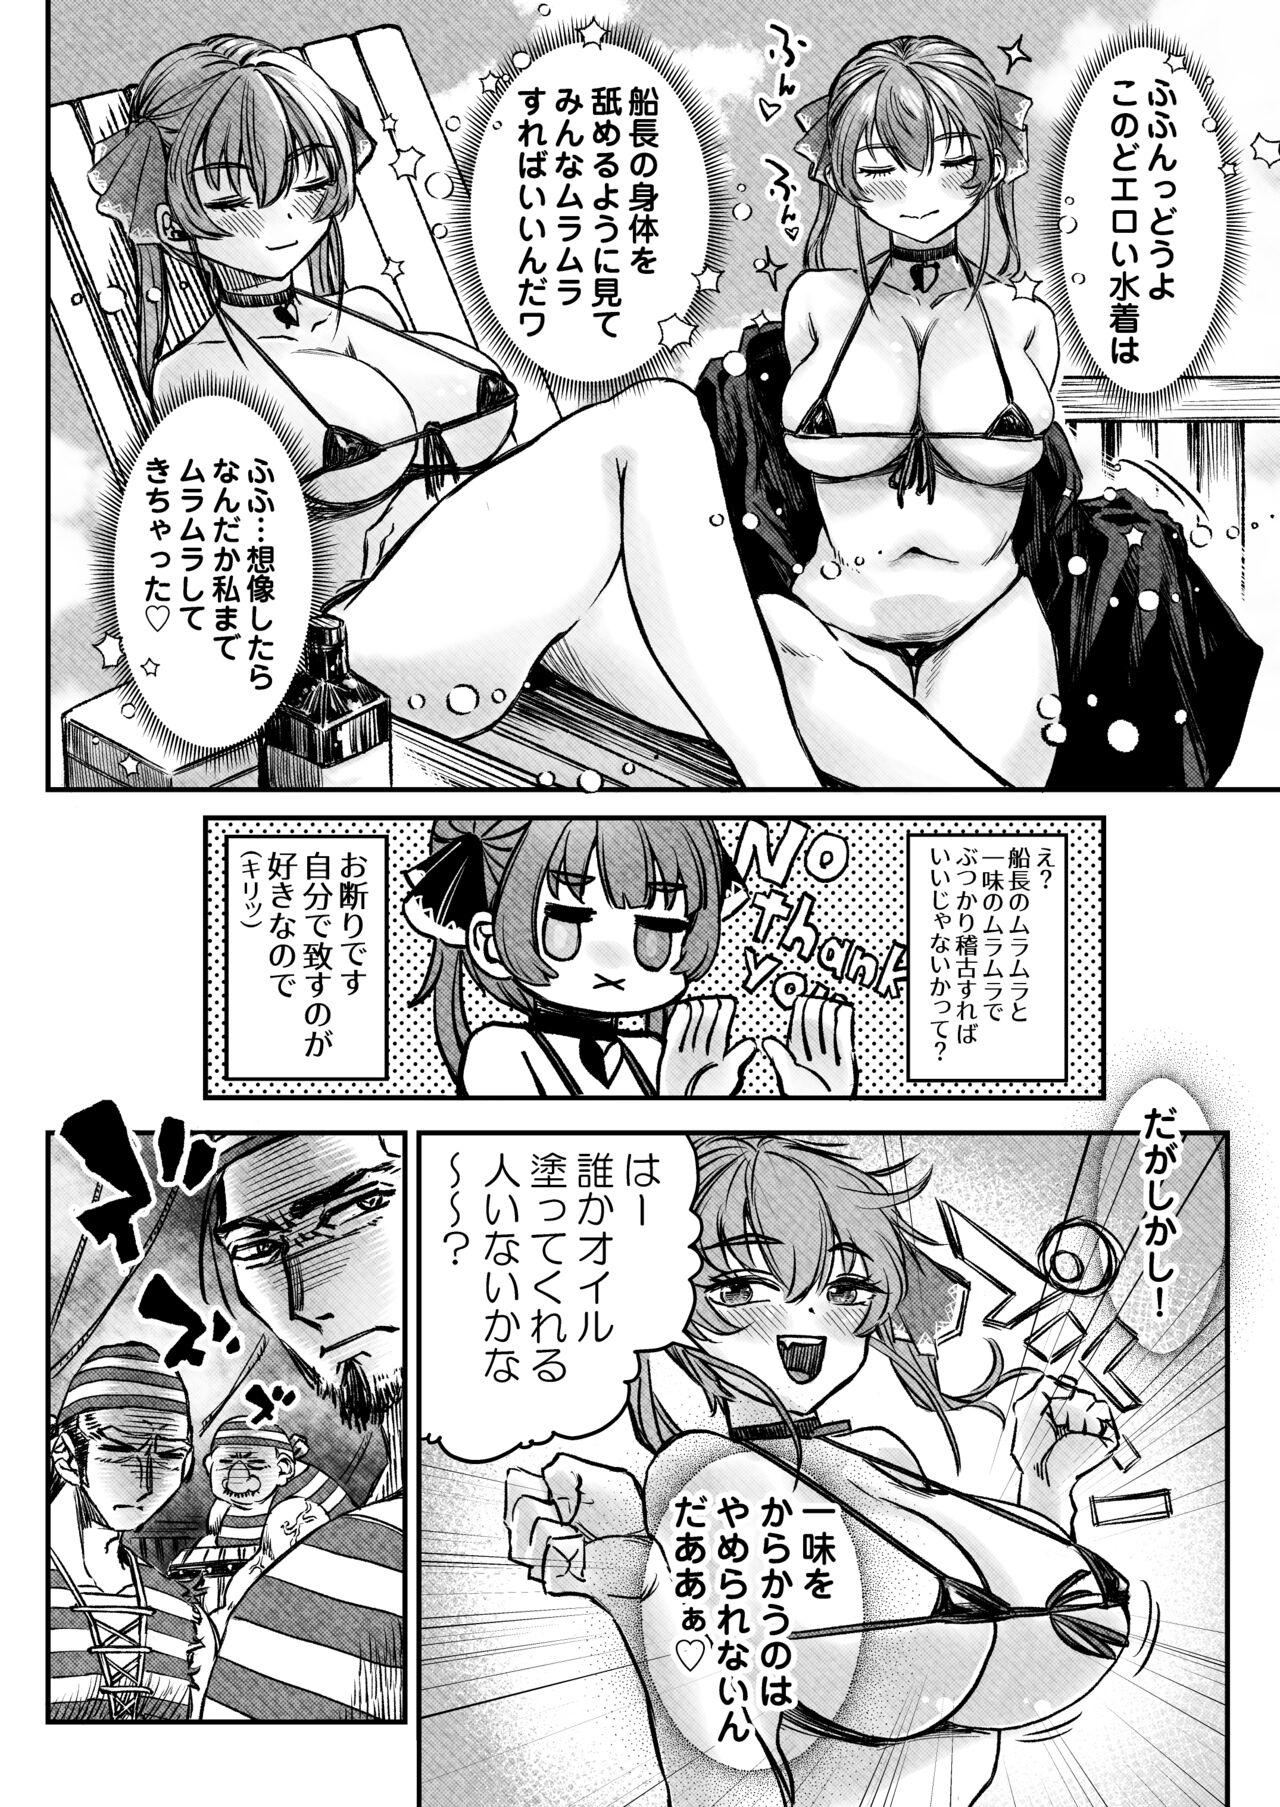 Hot Naked Girl Watashi ga Takarabako o Akete ii no ka ne? - Hololive Anime - Page 3